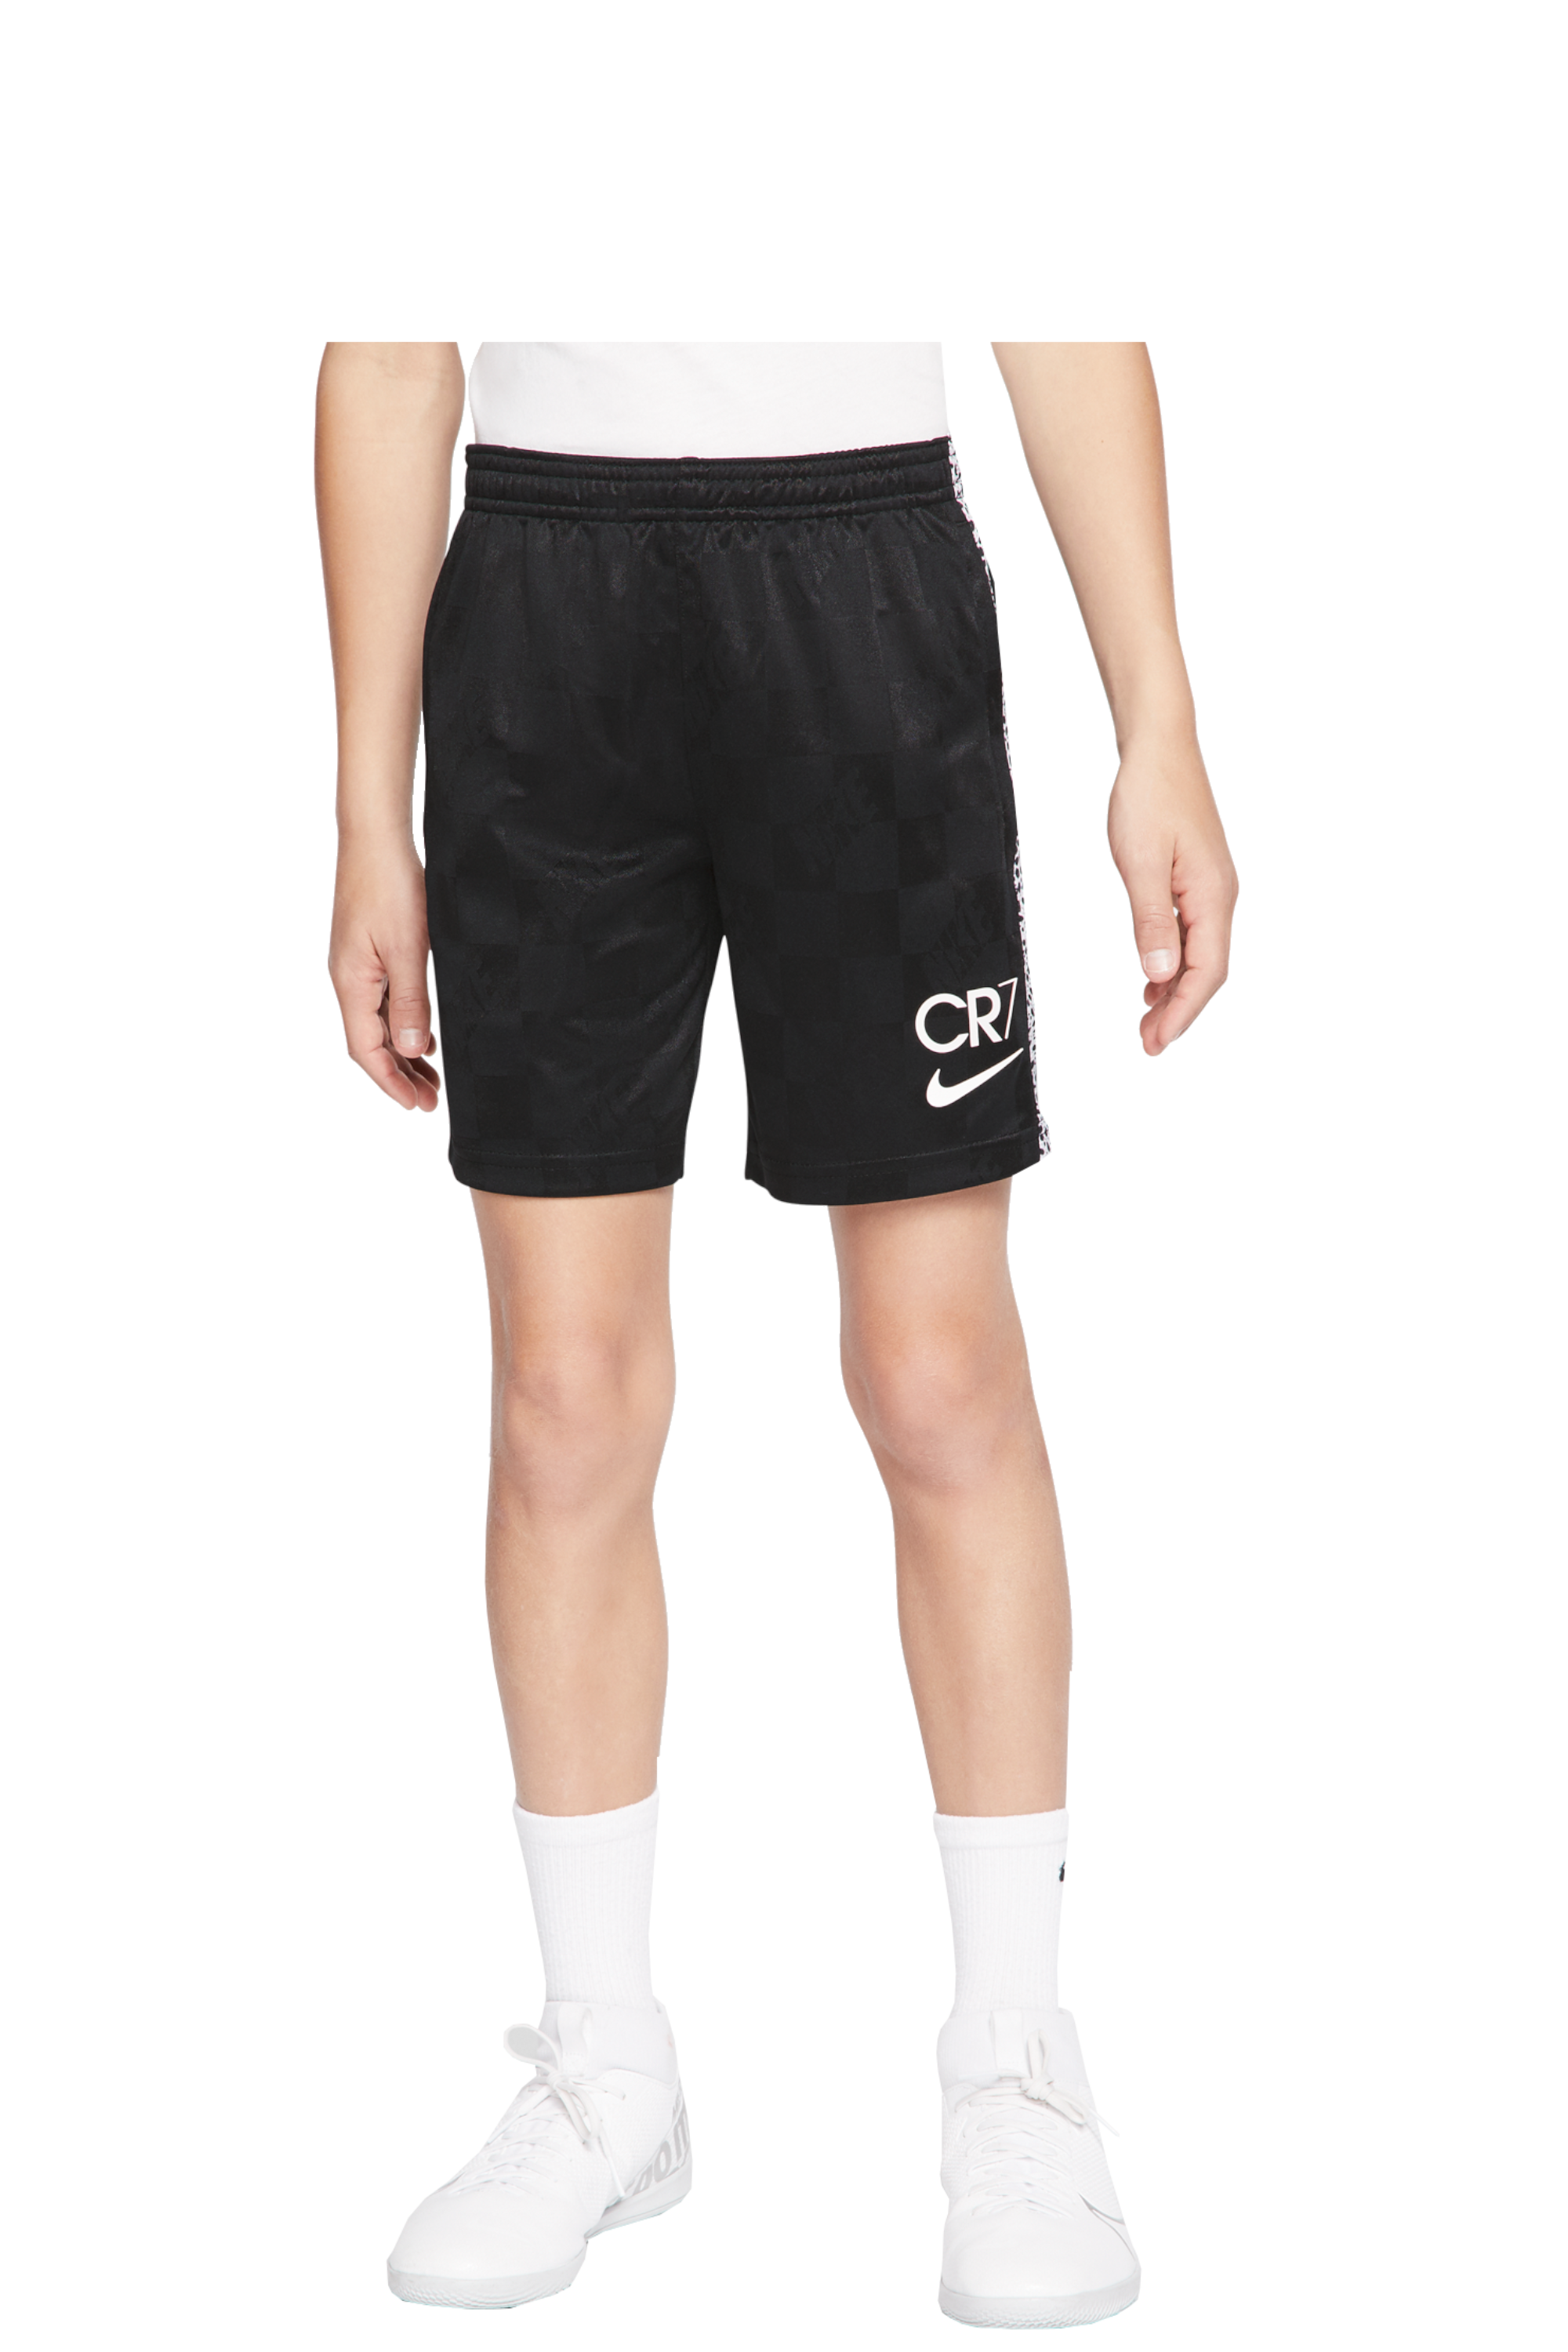 Shorts Nike Dry Nike CR7 Junior | R-GOL 